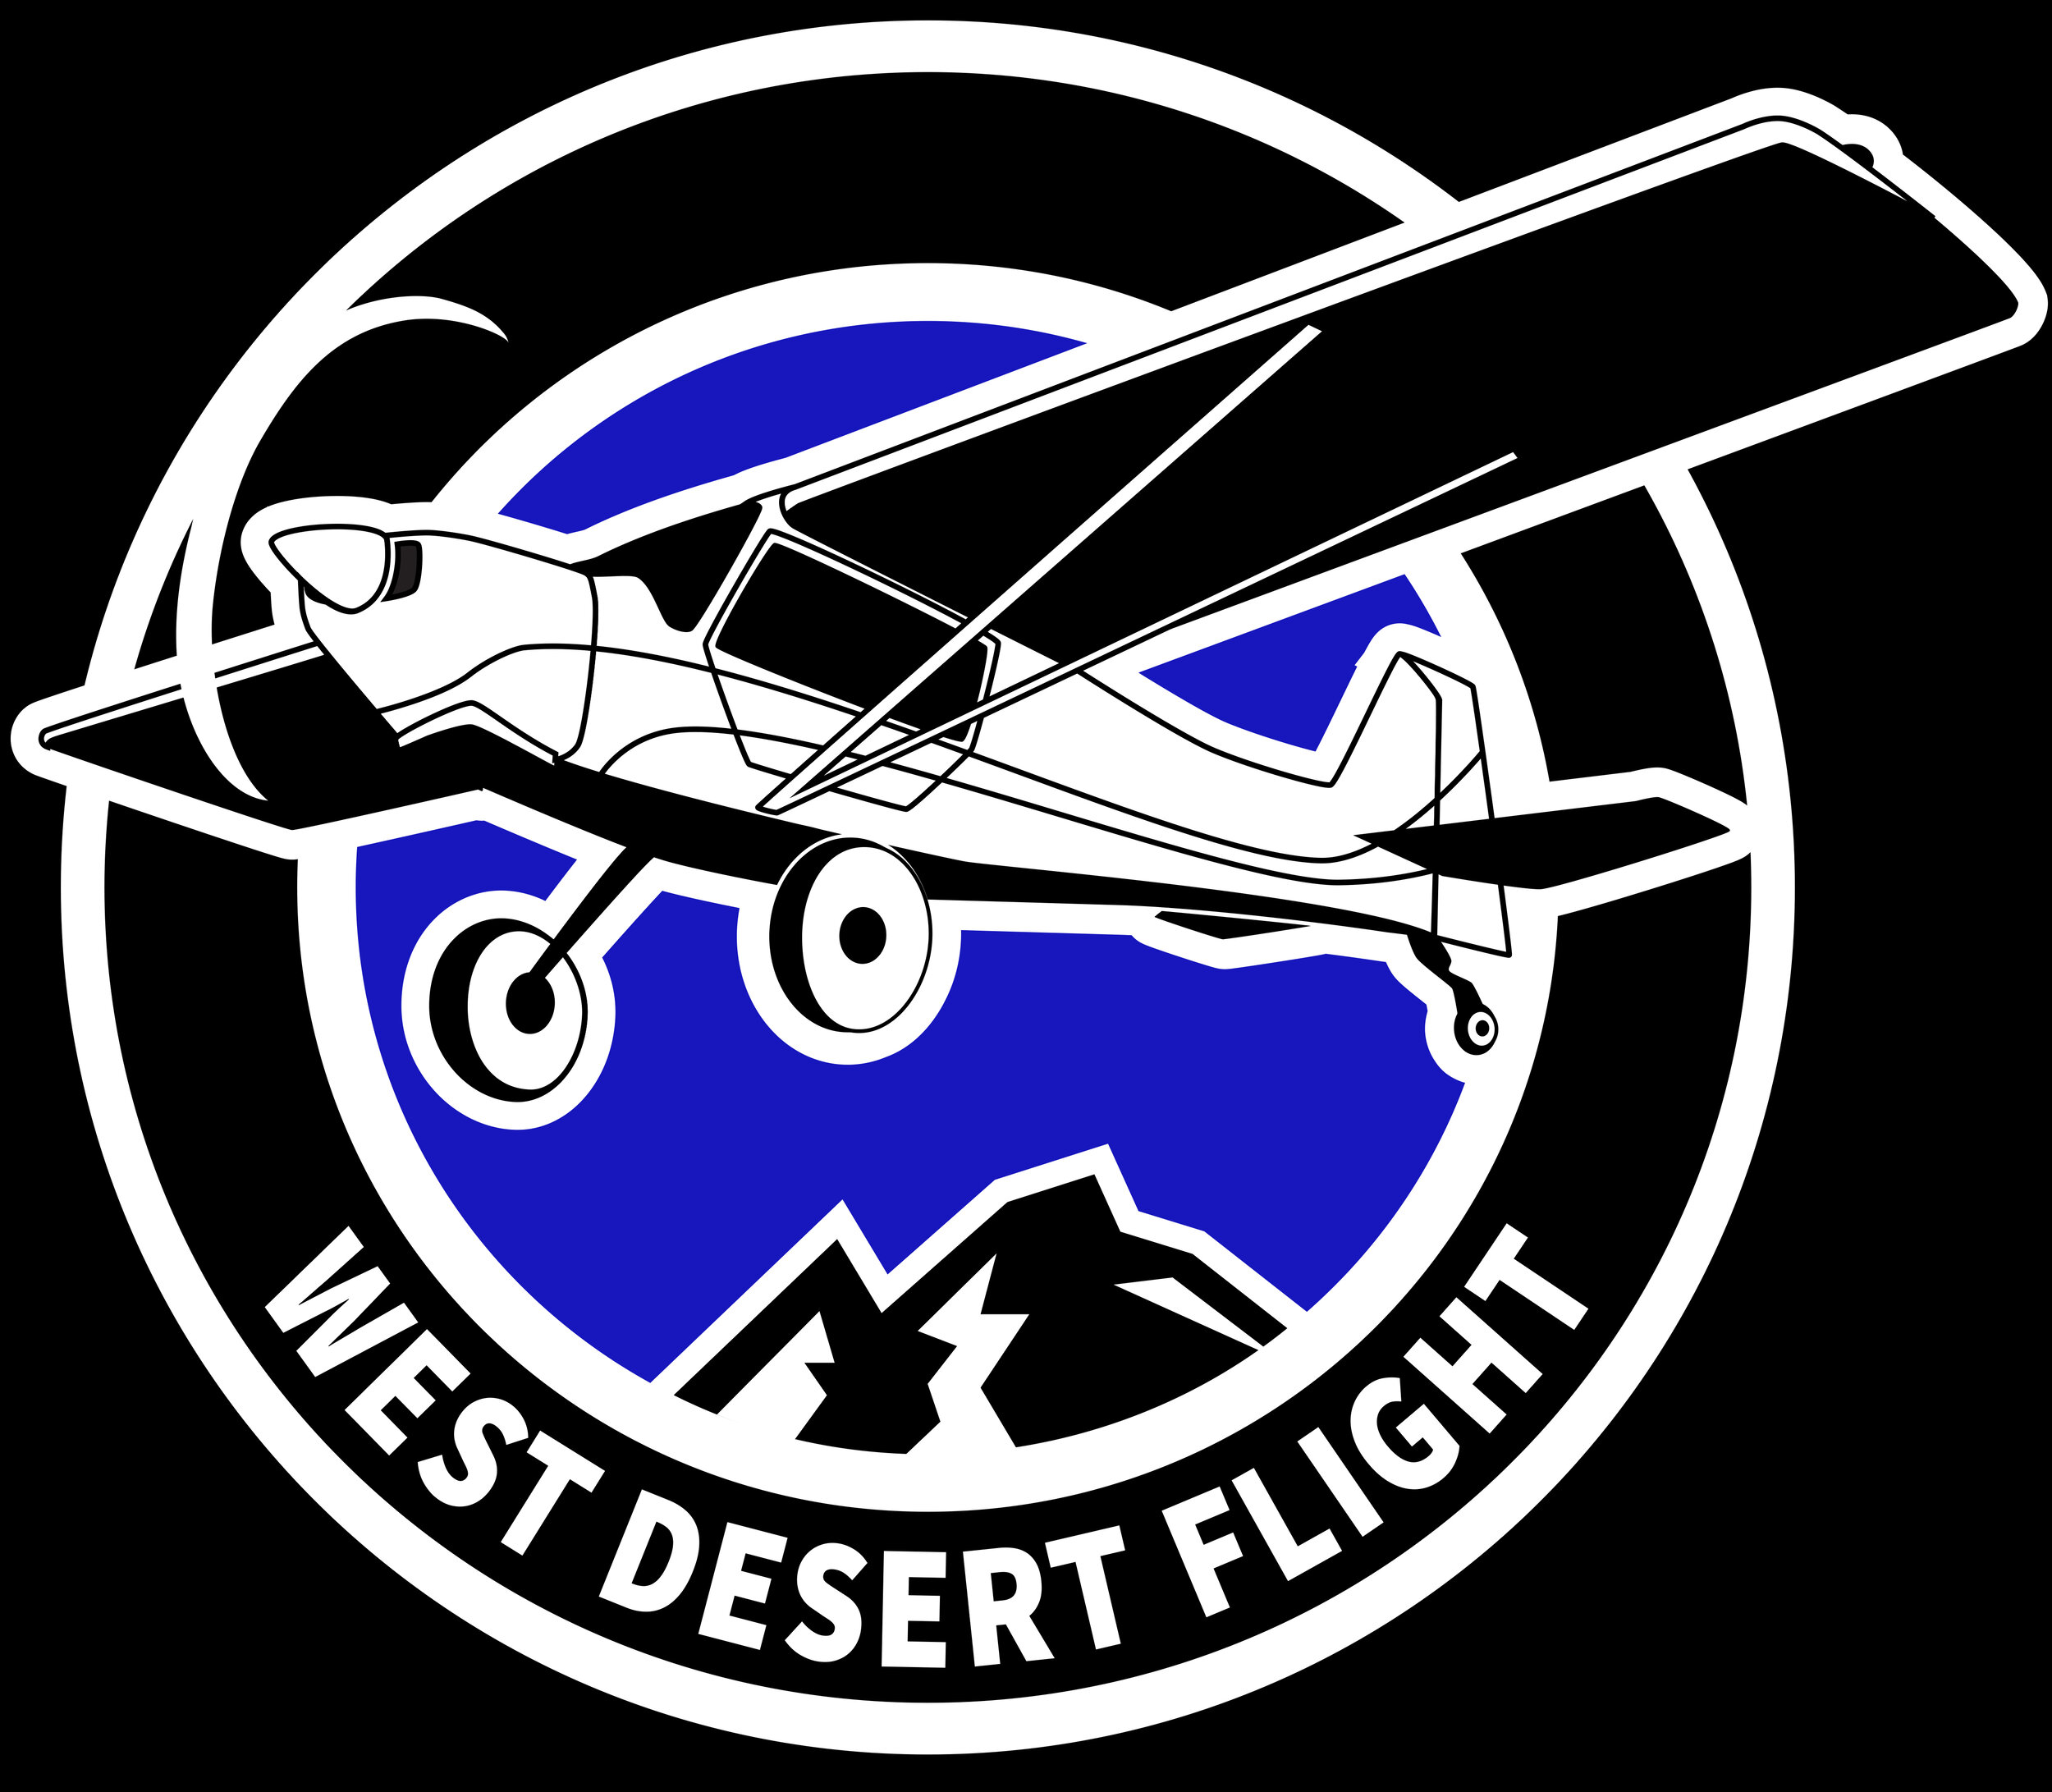 West Desert Flight